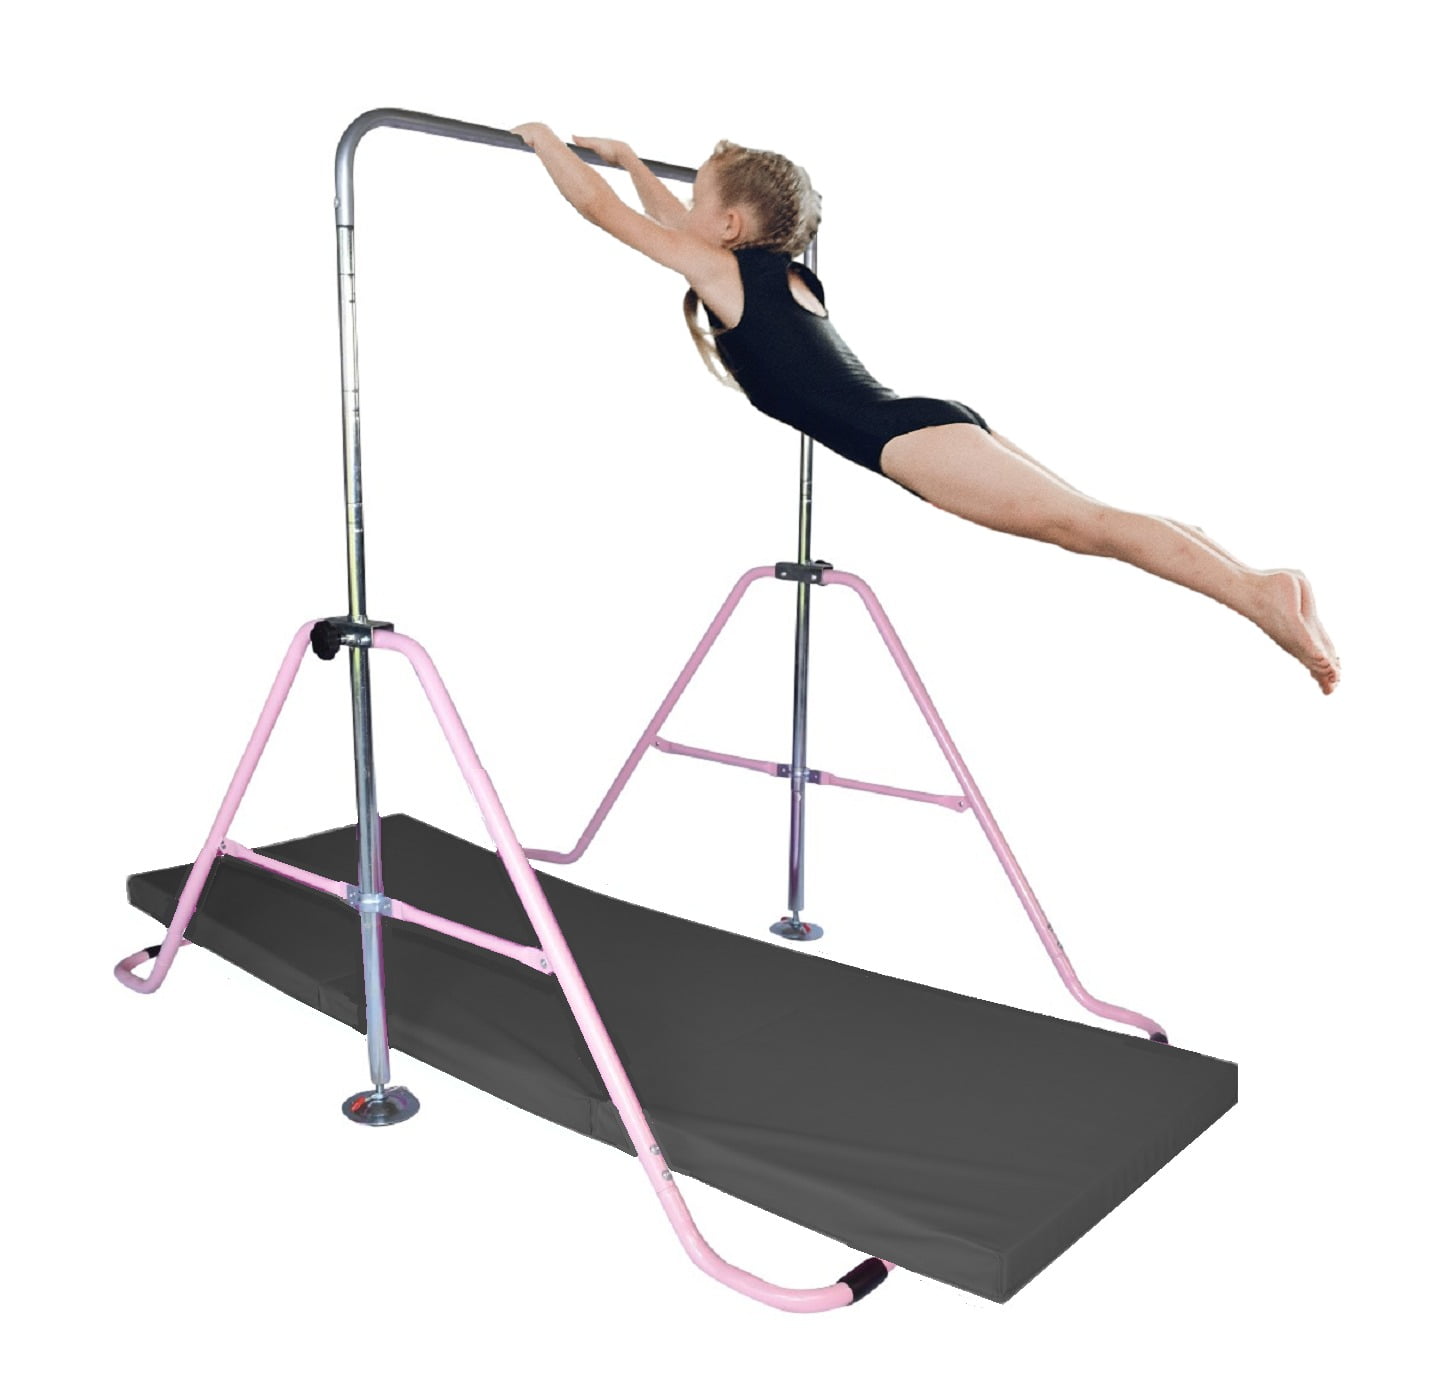 Gymnastics Horizontal Kip Bar Jungle Gym Adjustable Up to 5FT with Tumble Mat 